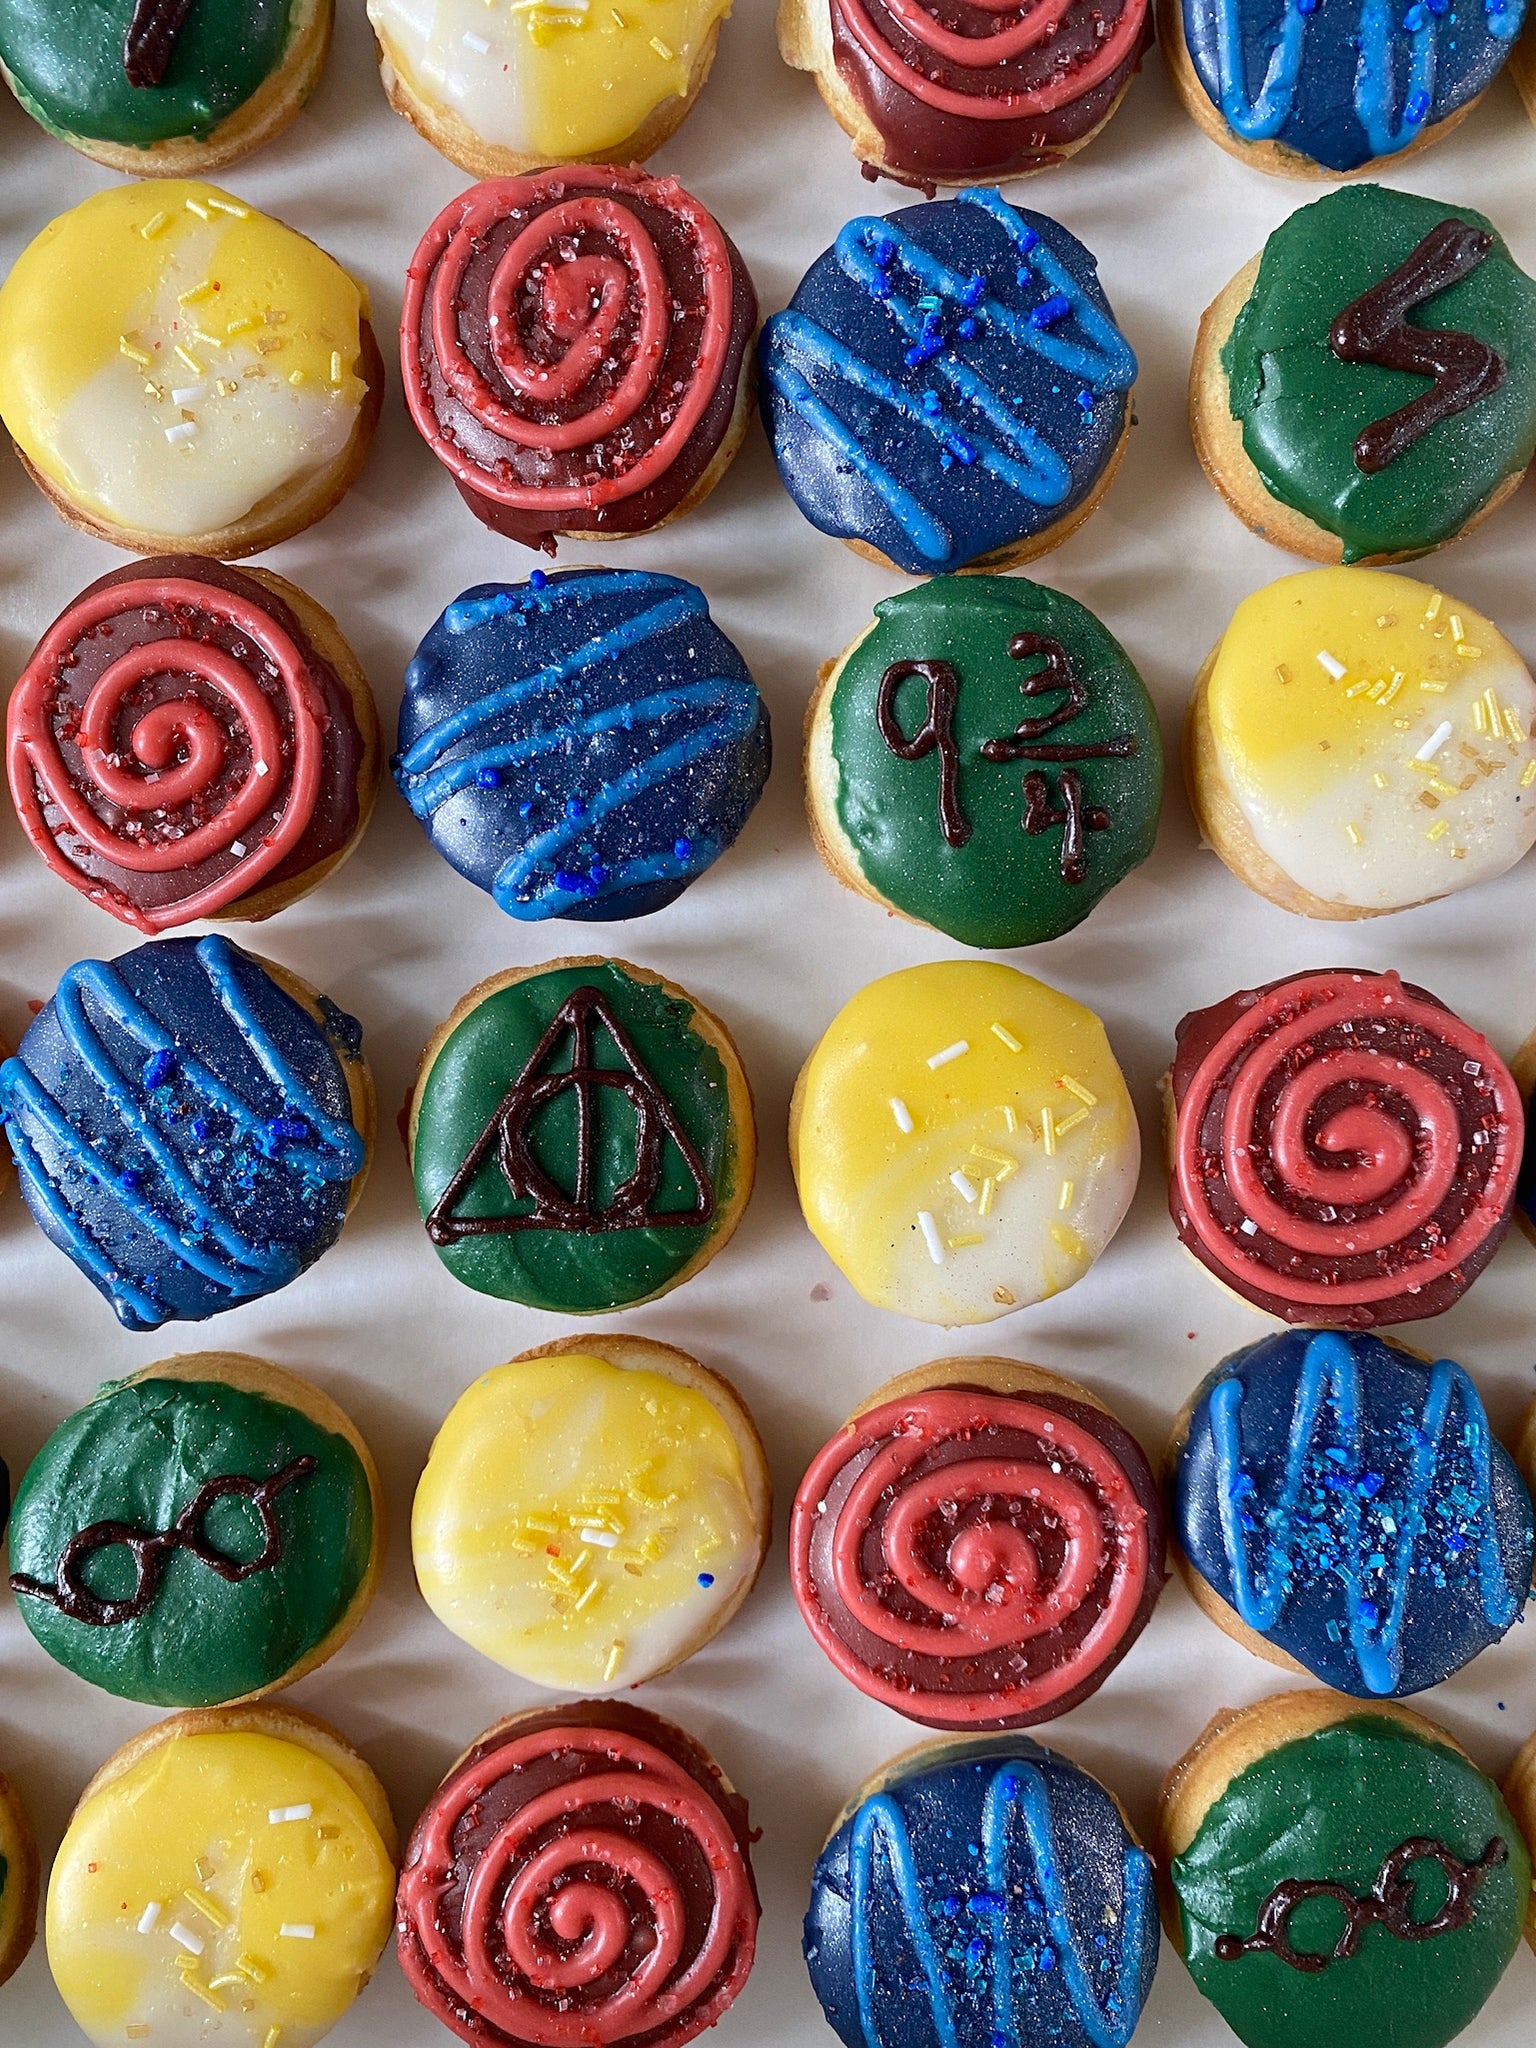 Harry Potter Themed Mini Donuts!